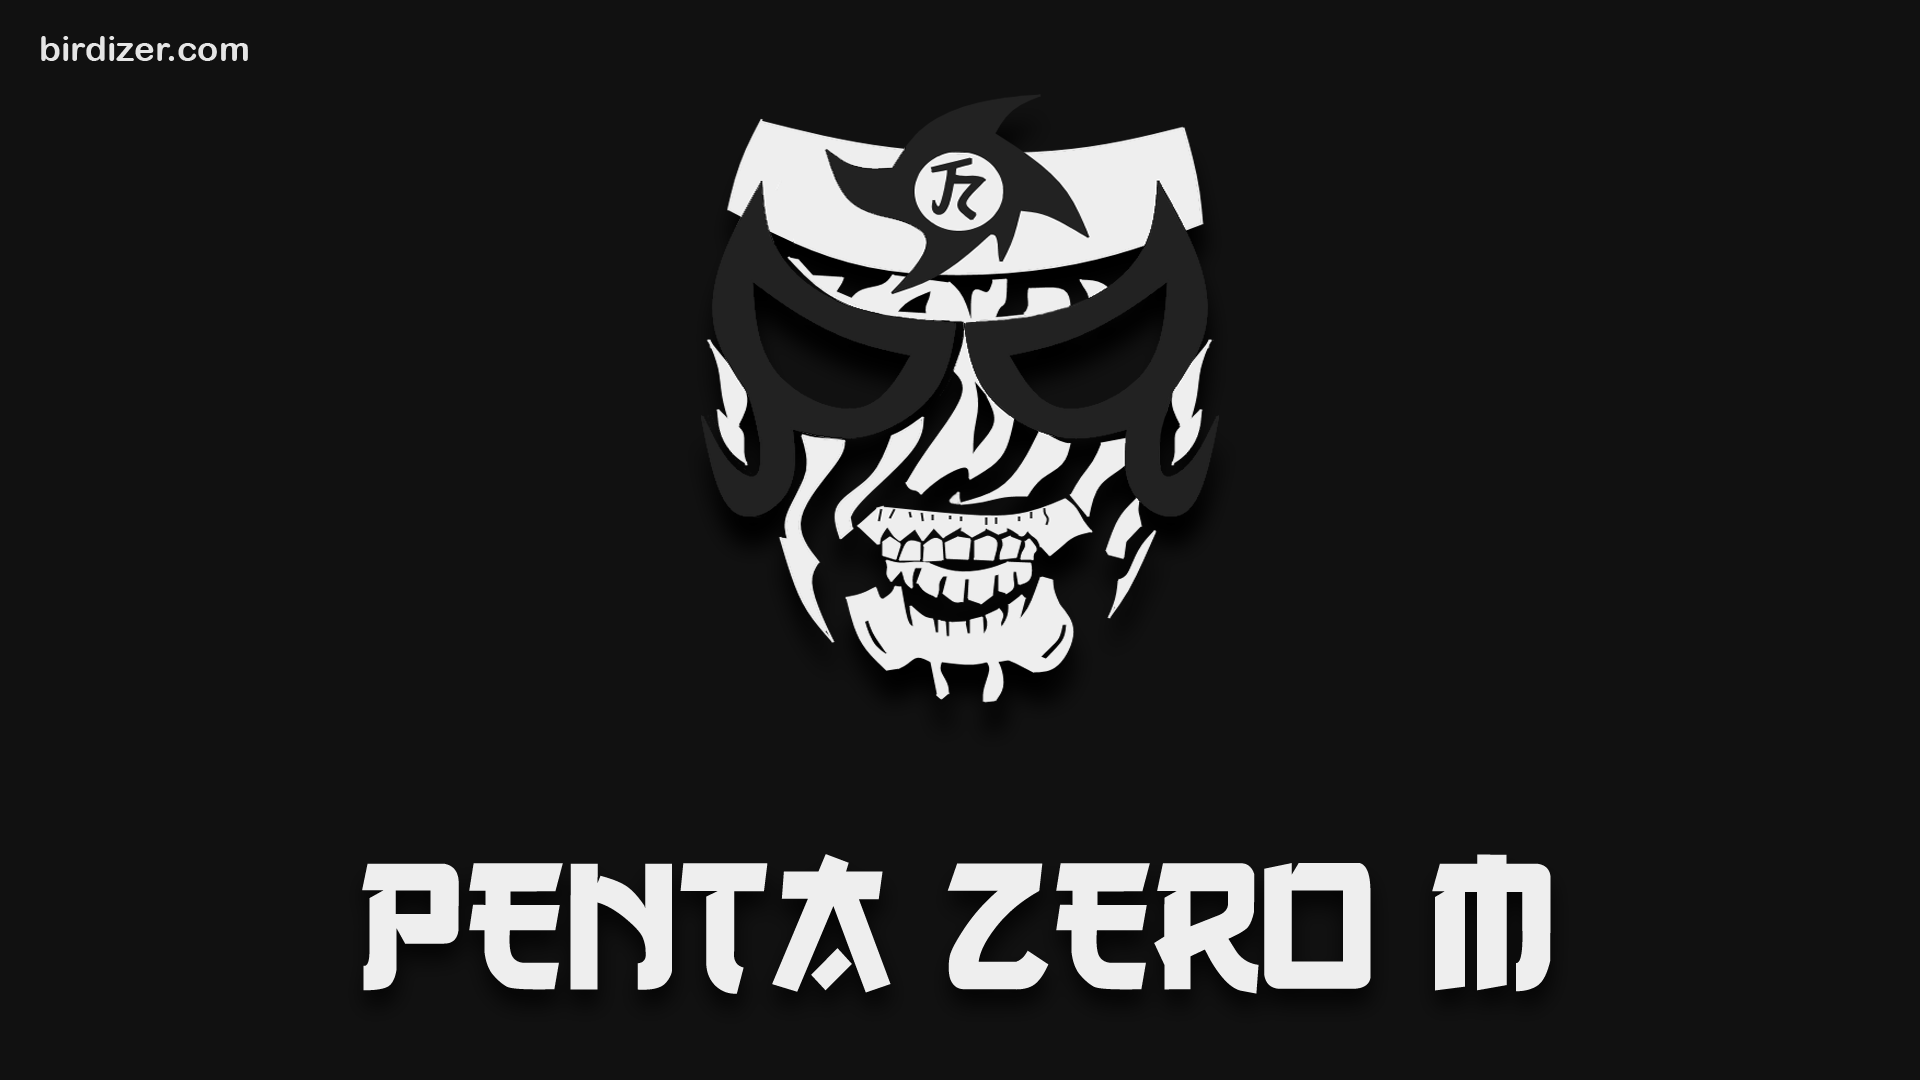 Penta Zero M máscara wallpaper. Imagenes de lucha libre, Lucha